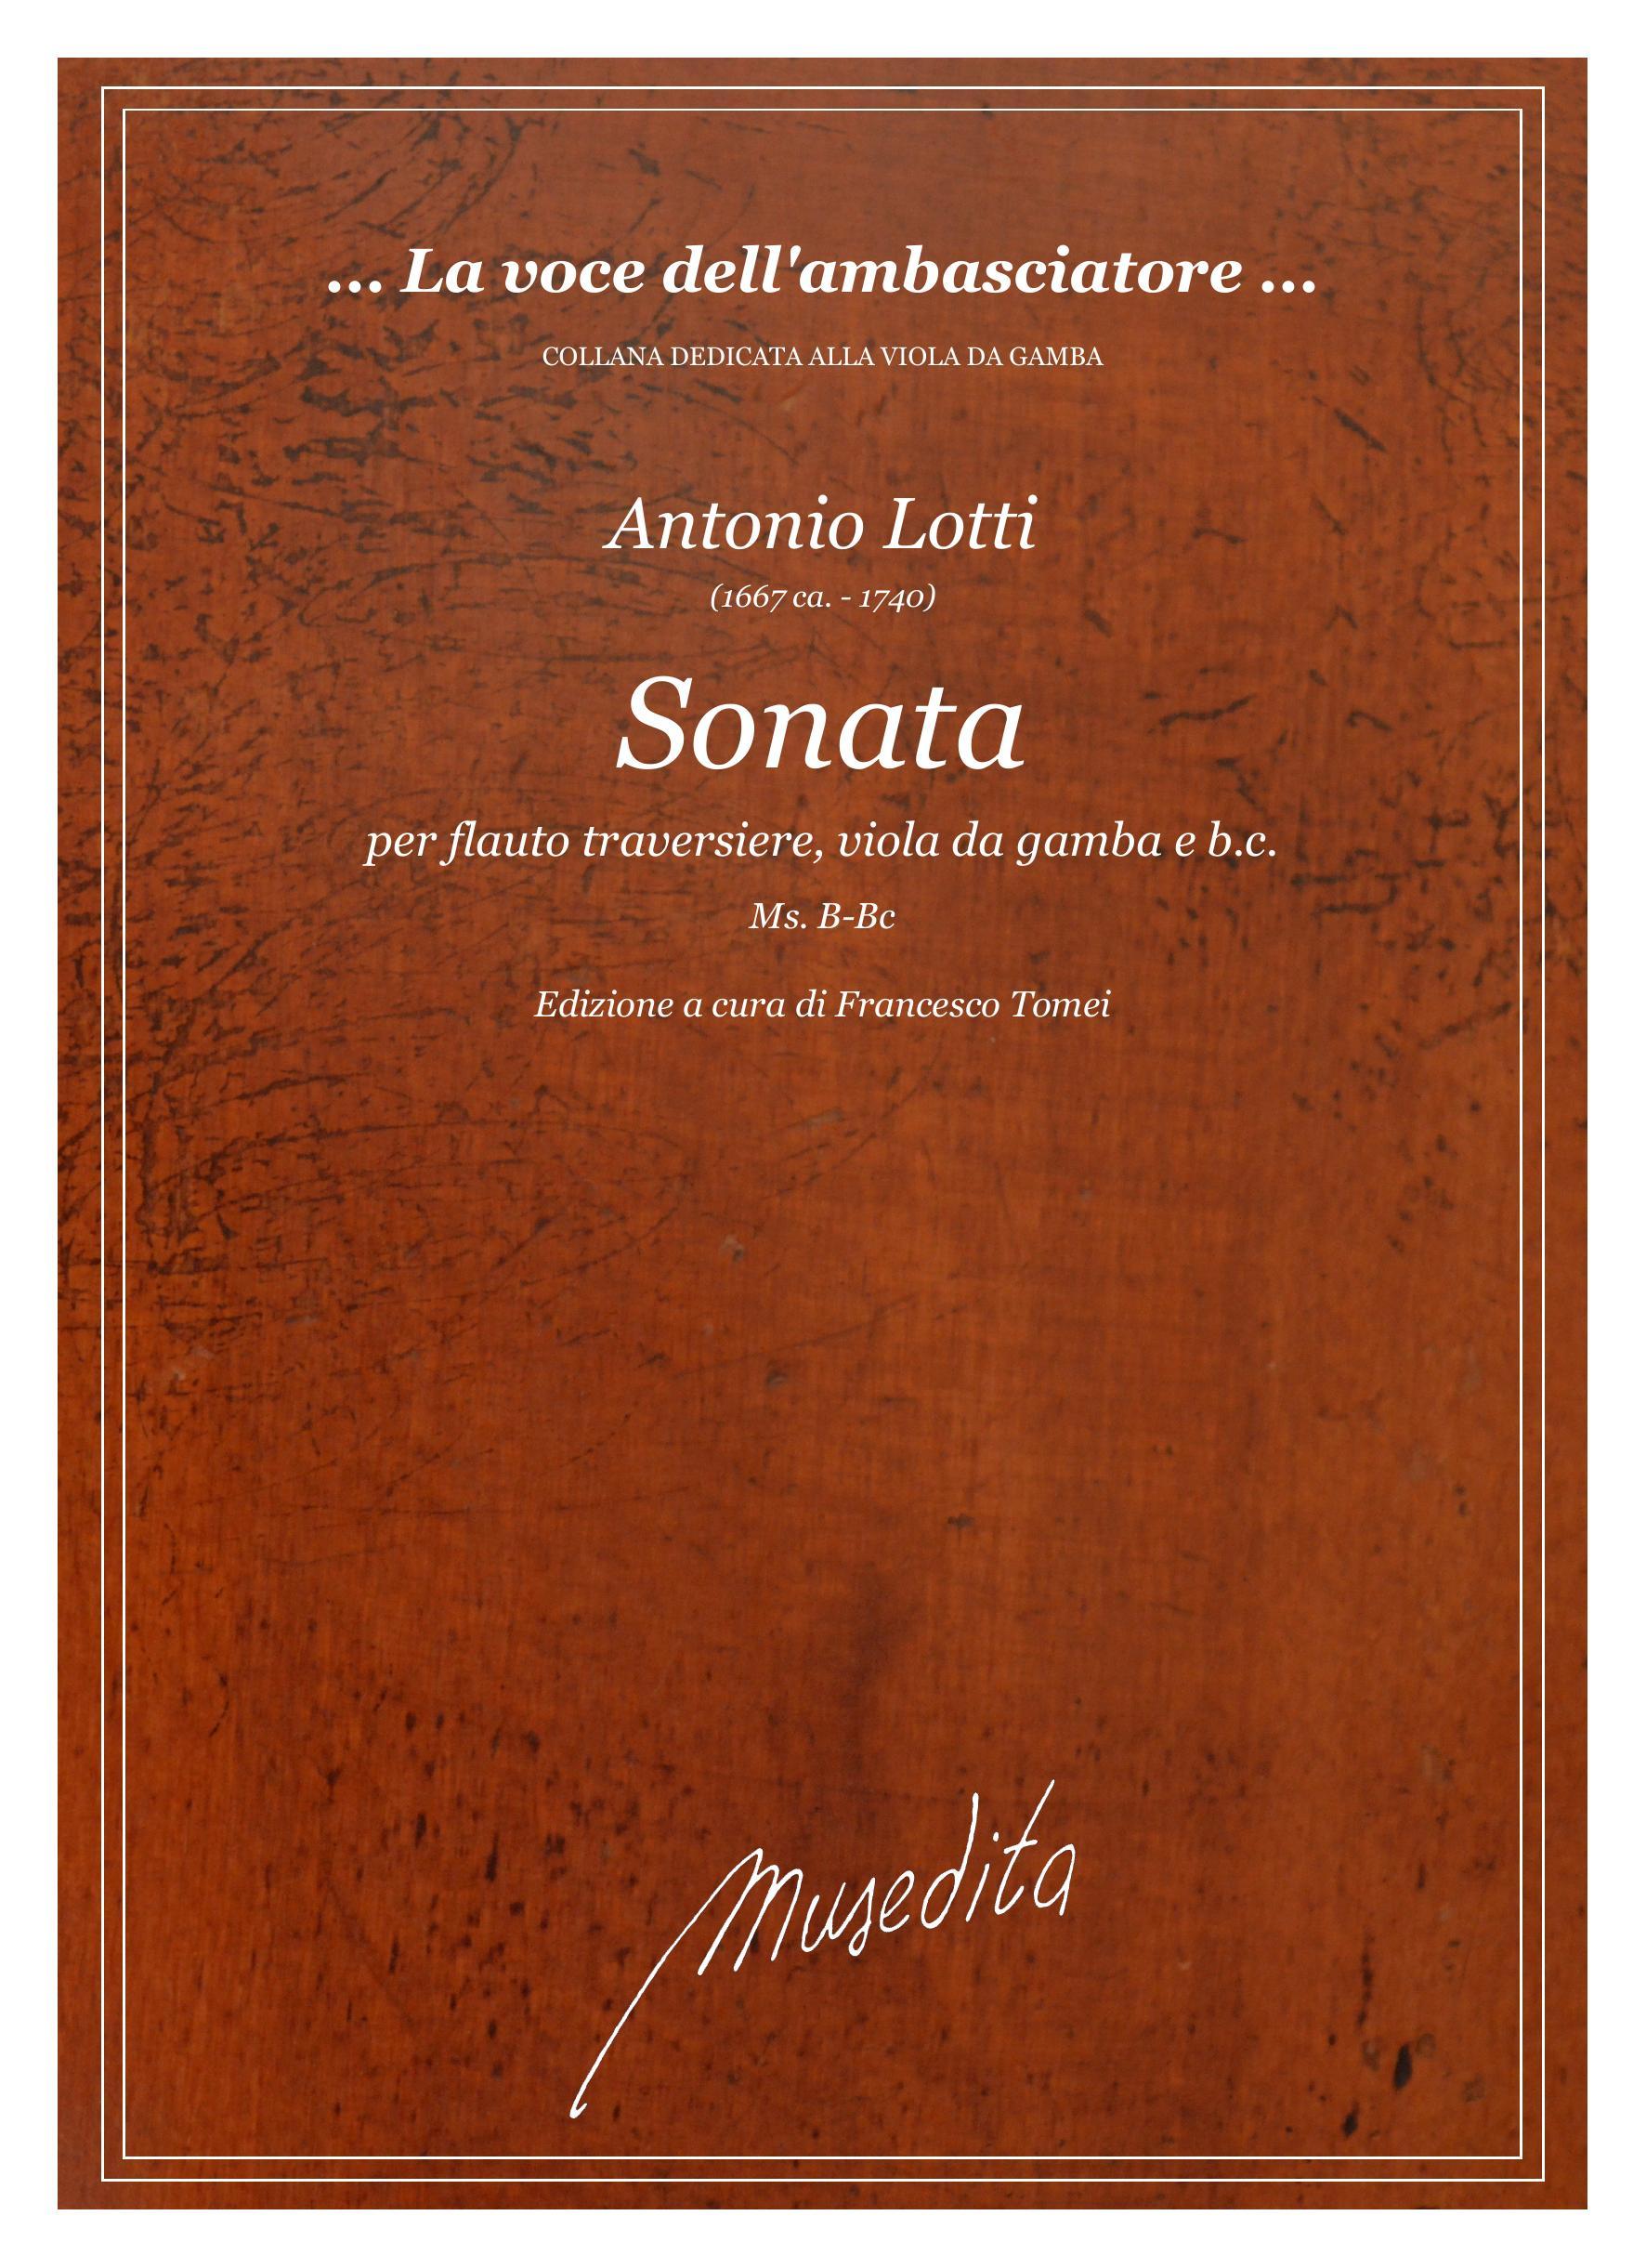 A.Lotti: Sonata (Ms, B-Bc)